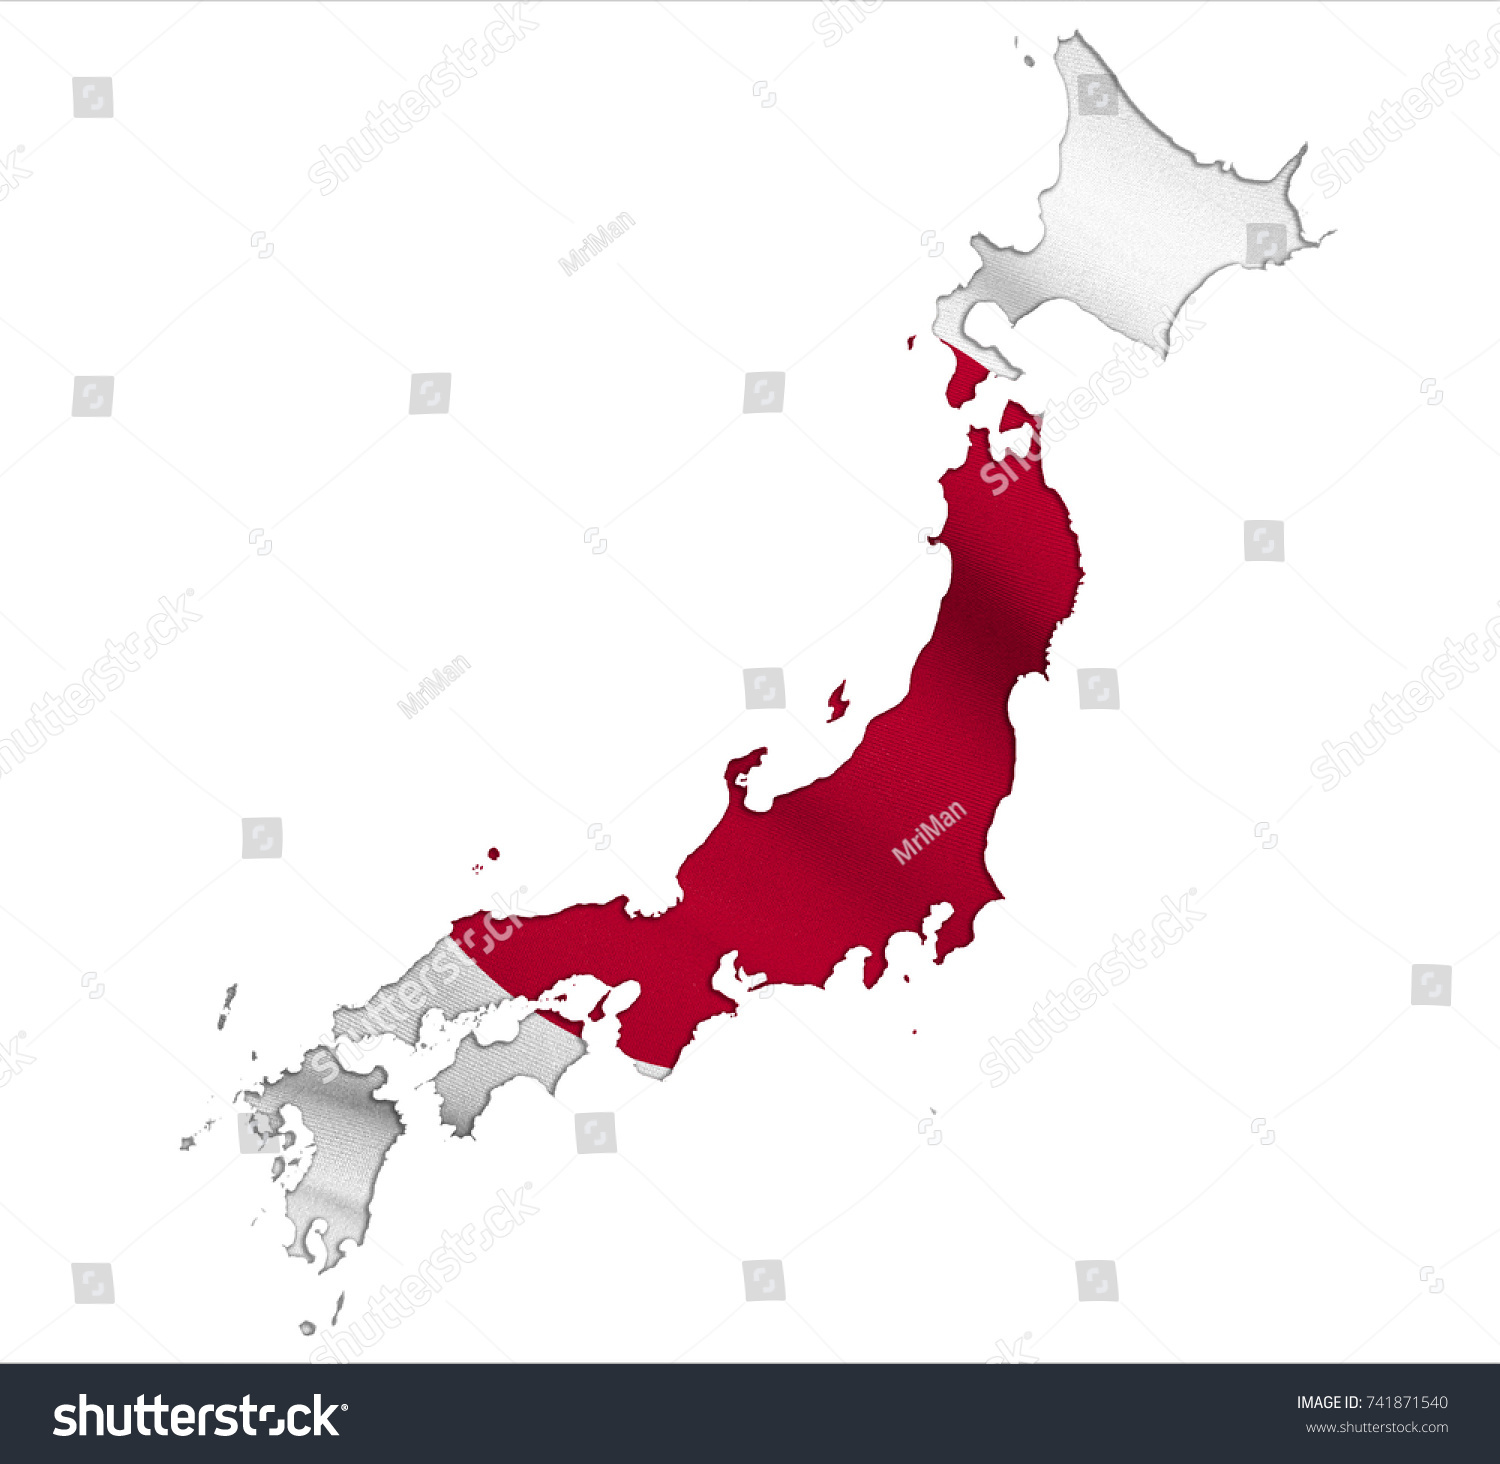 flag map of japan - Royalty Free Stock Photo 741871540 - Avopix.com